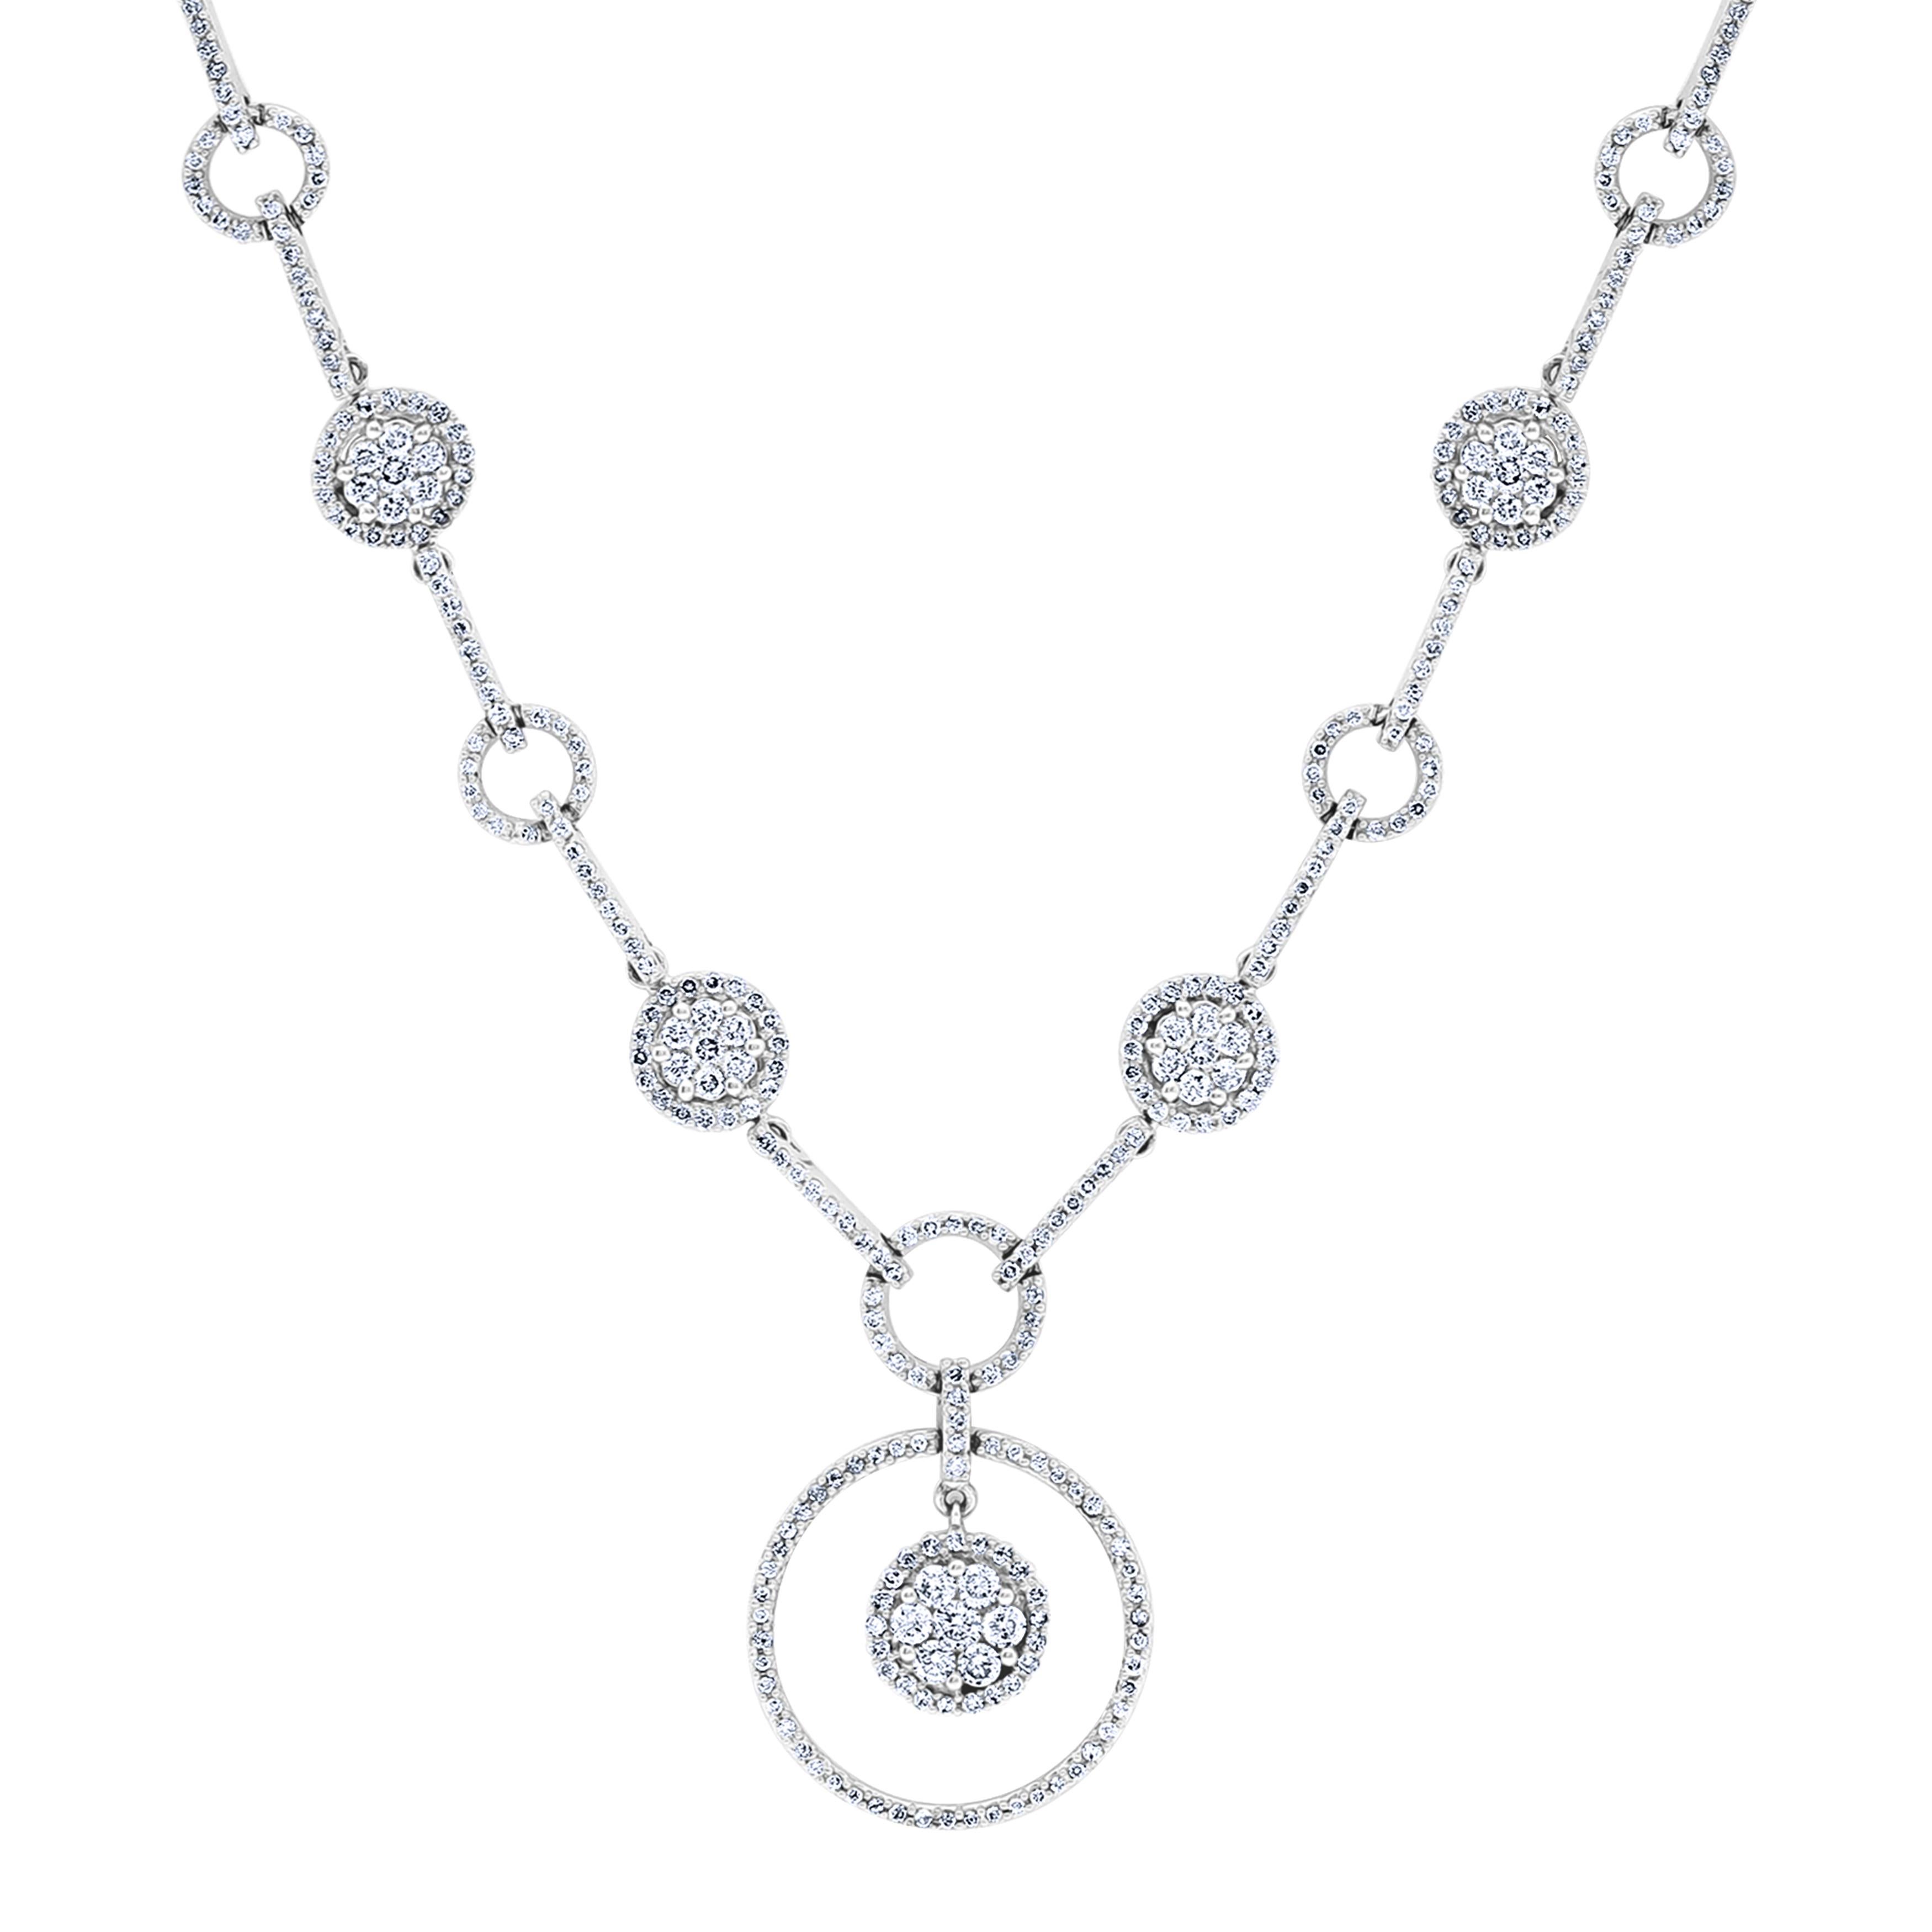 Designer Effy's Elegant Dangling 3.63 Carat Diamond Necklace in 14 Karat Gold 8